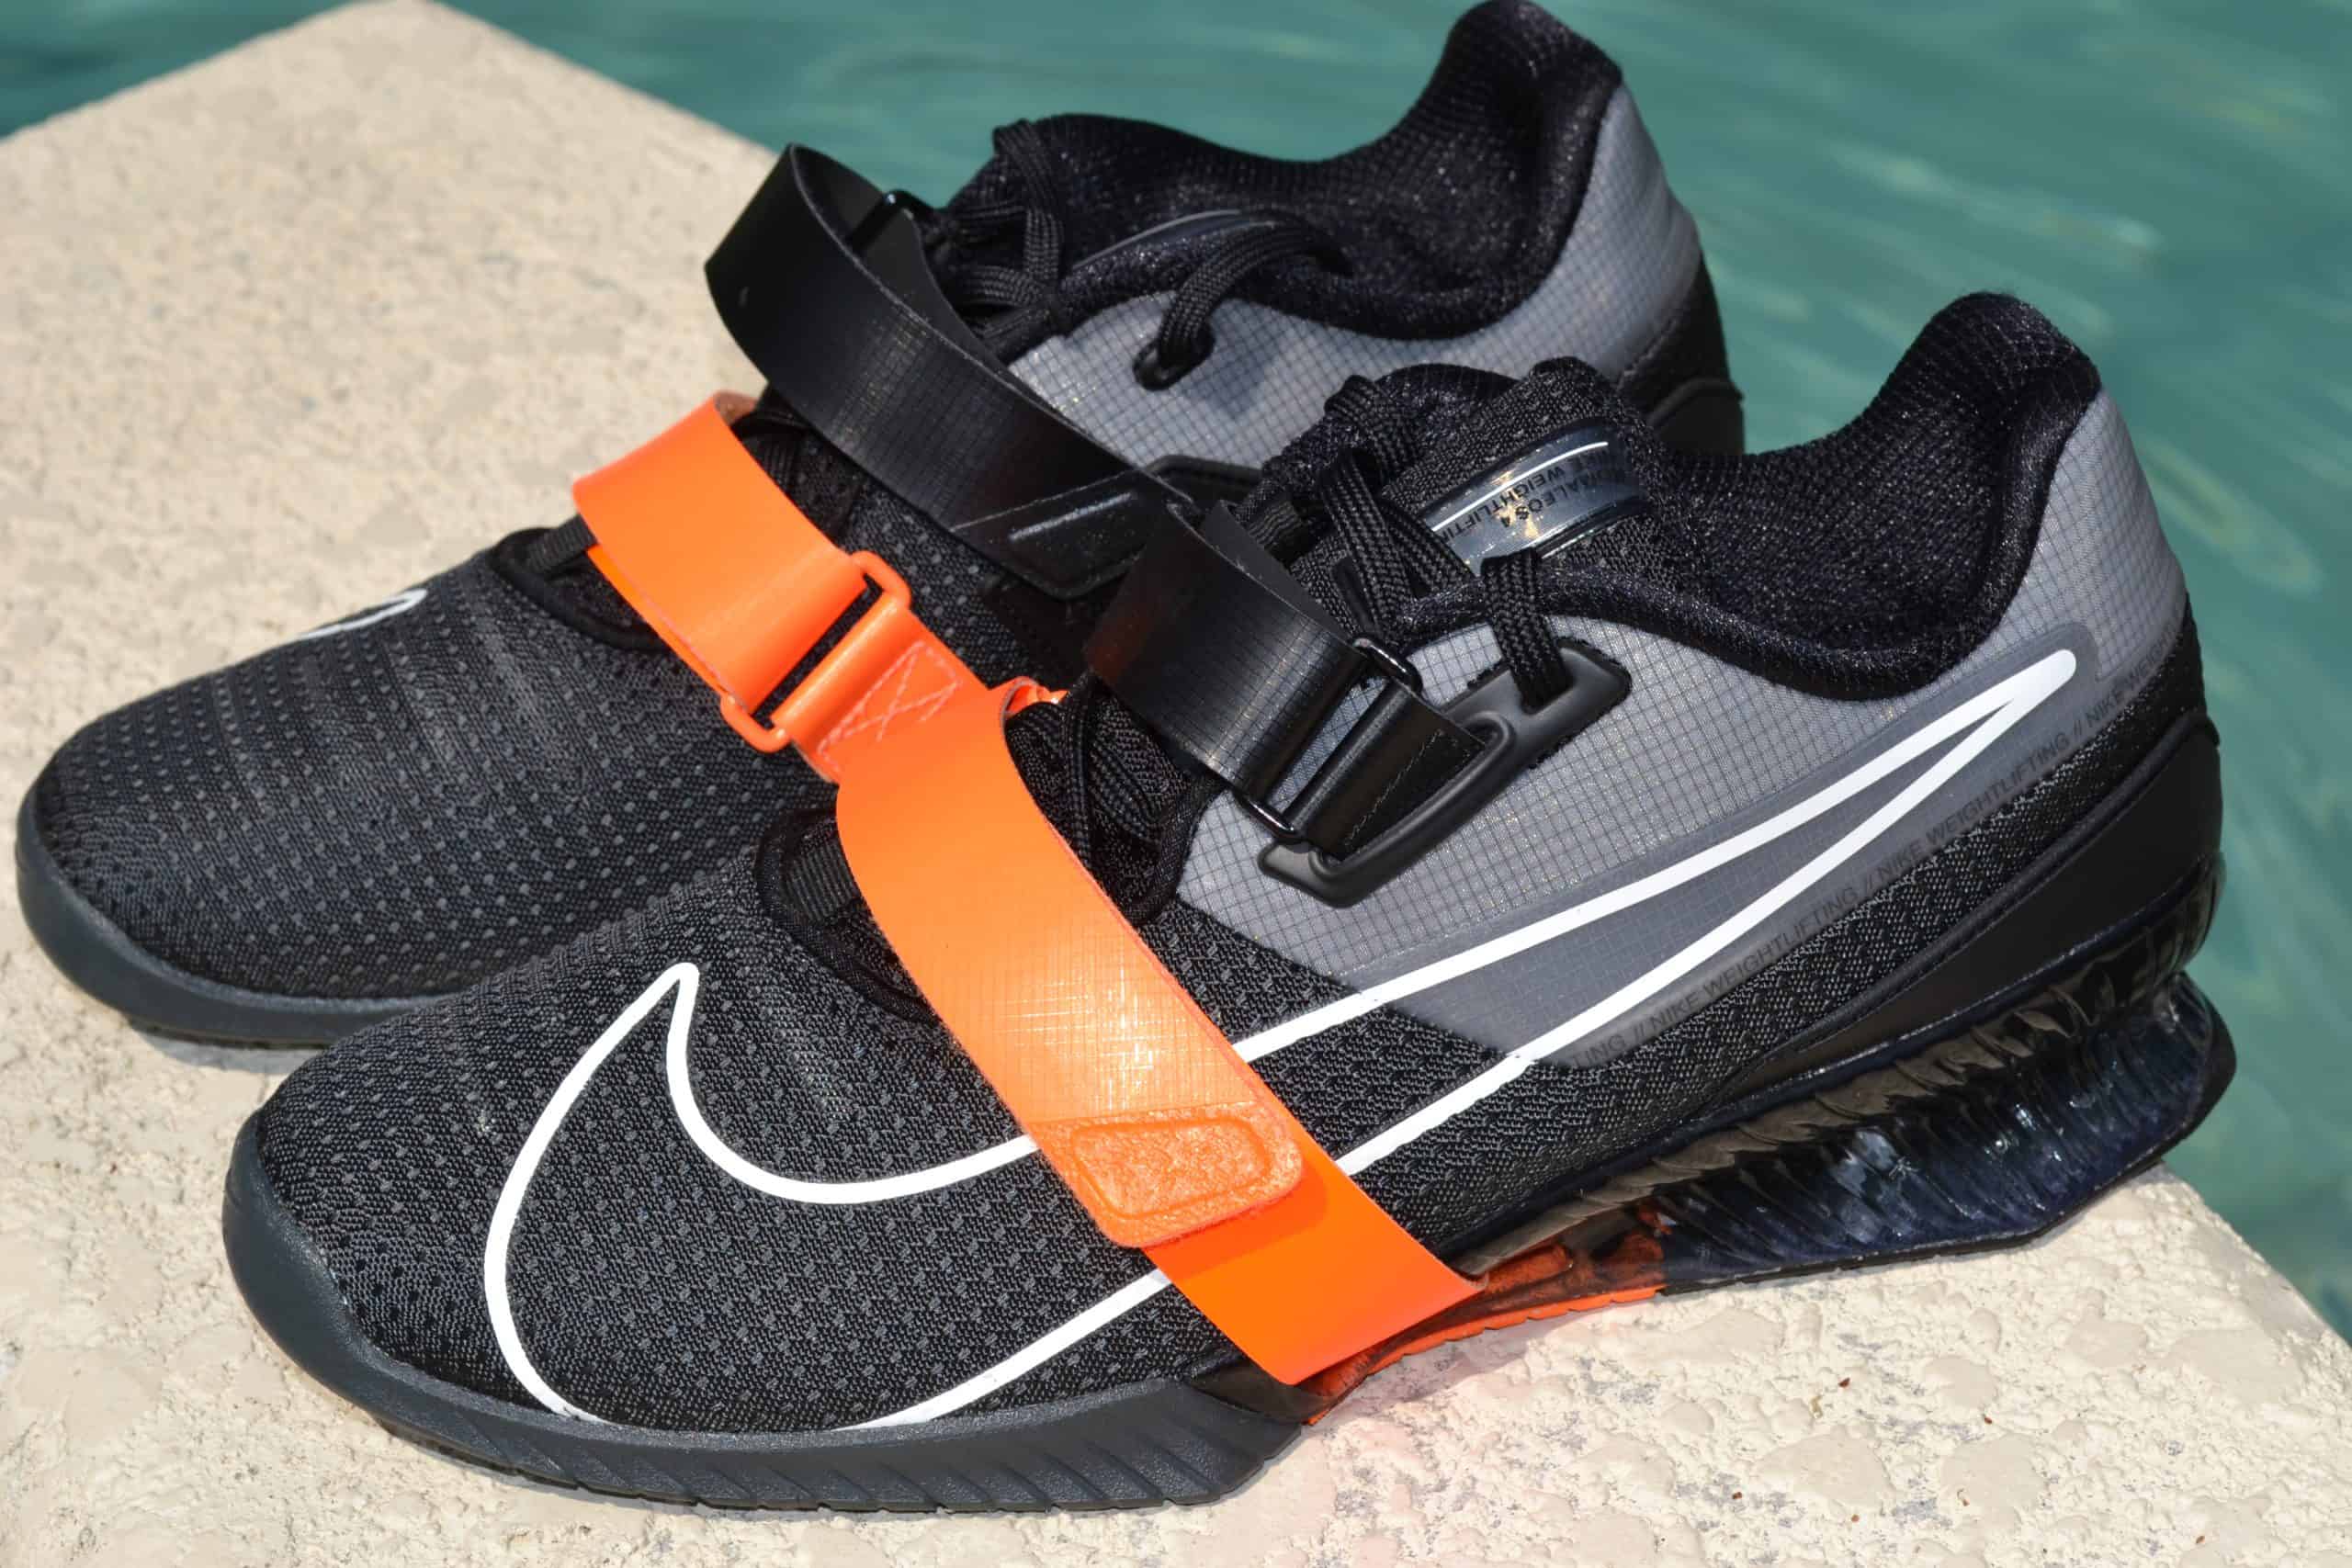 Nike Romaleos 4 - Black/Orange Side View